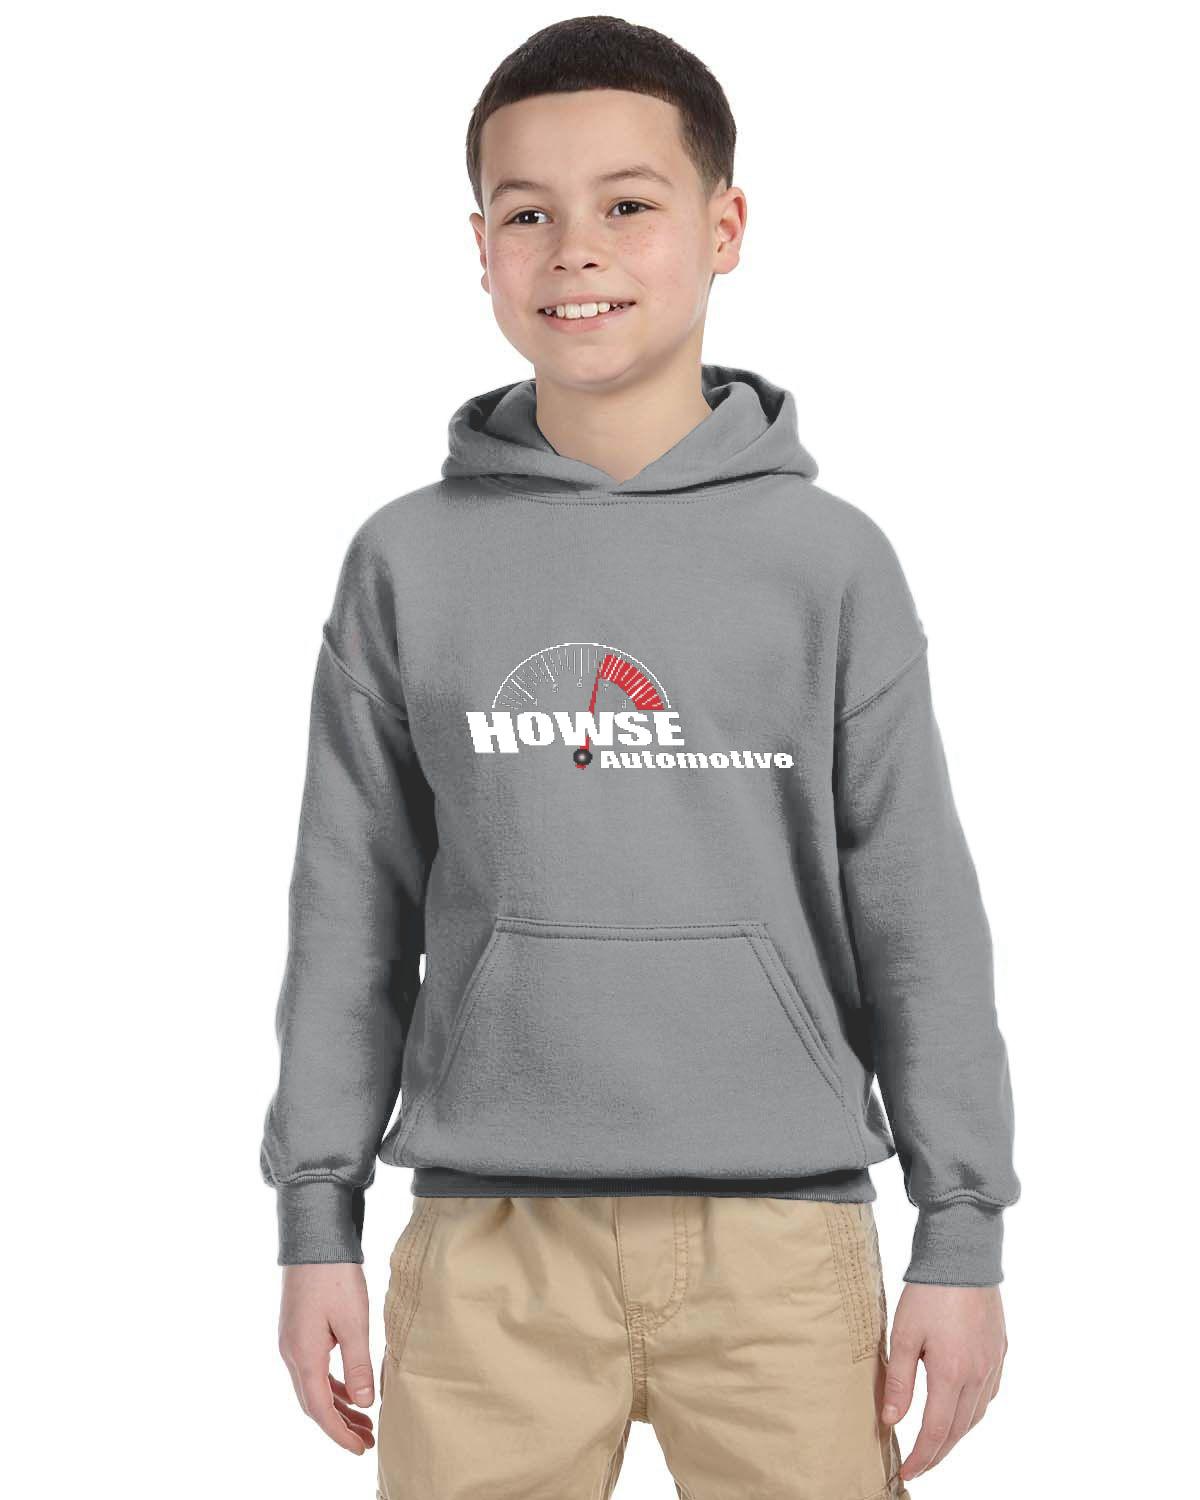 Howse Automotive Kid's Hoodie